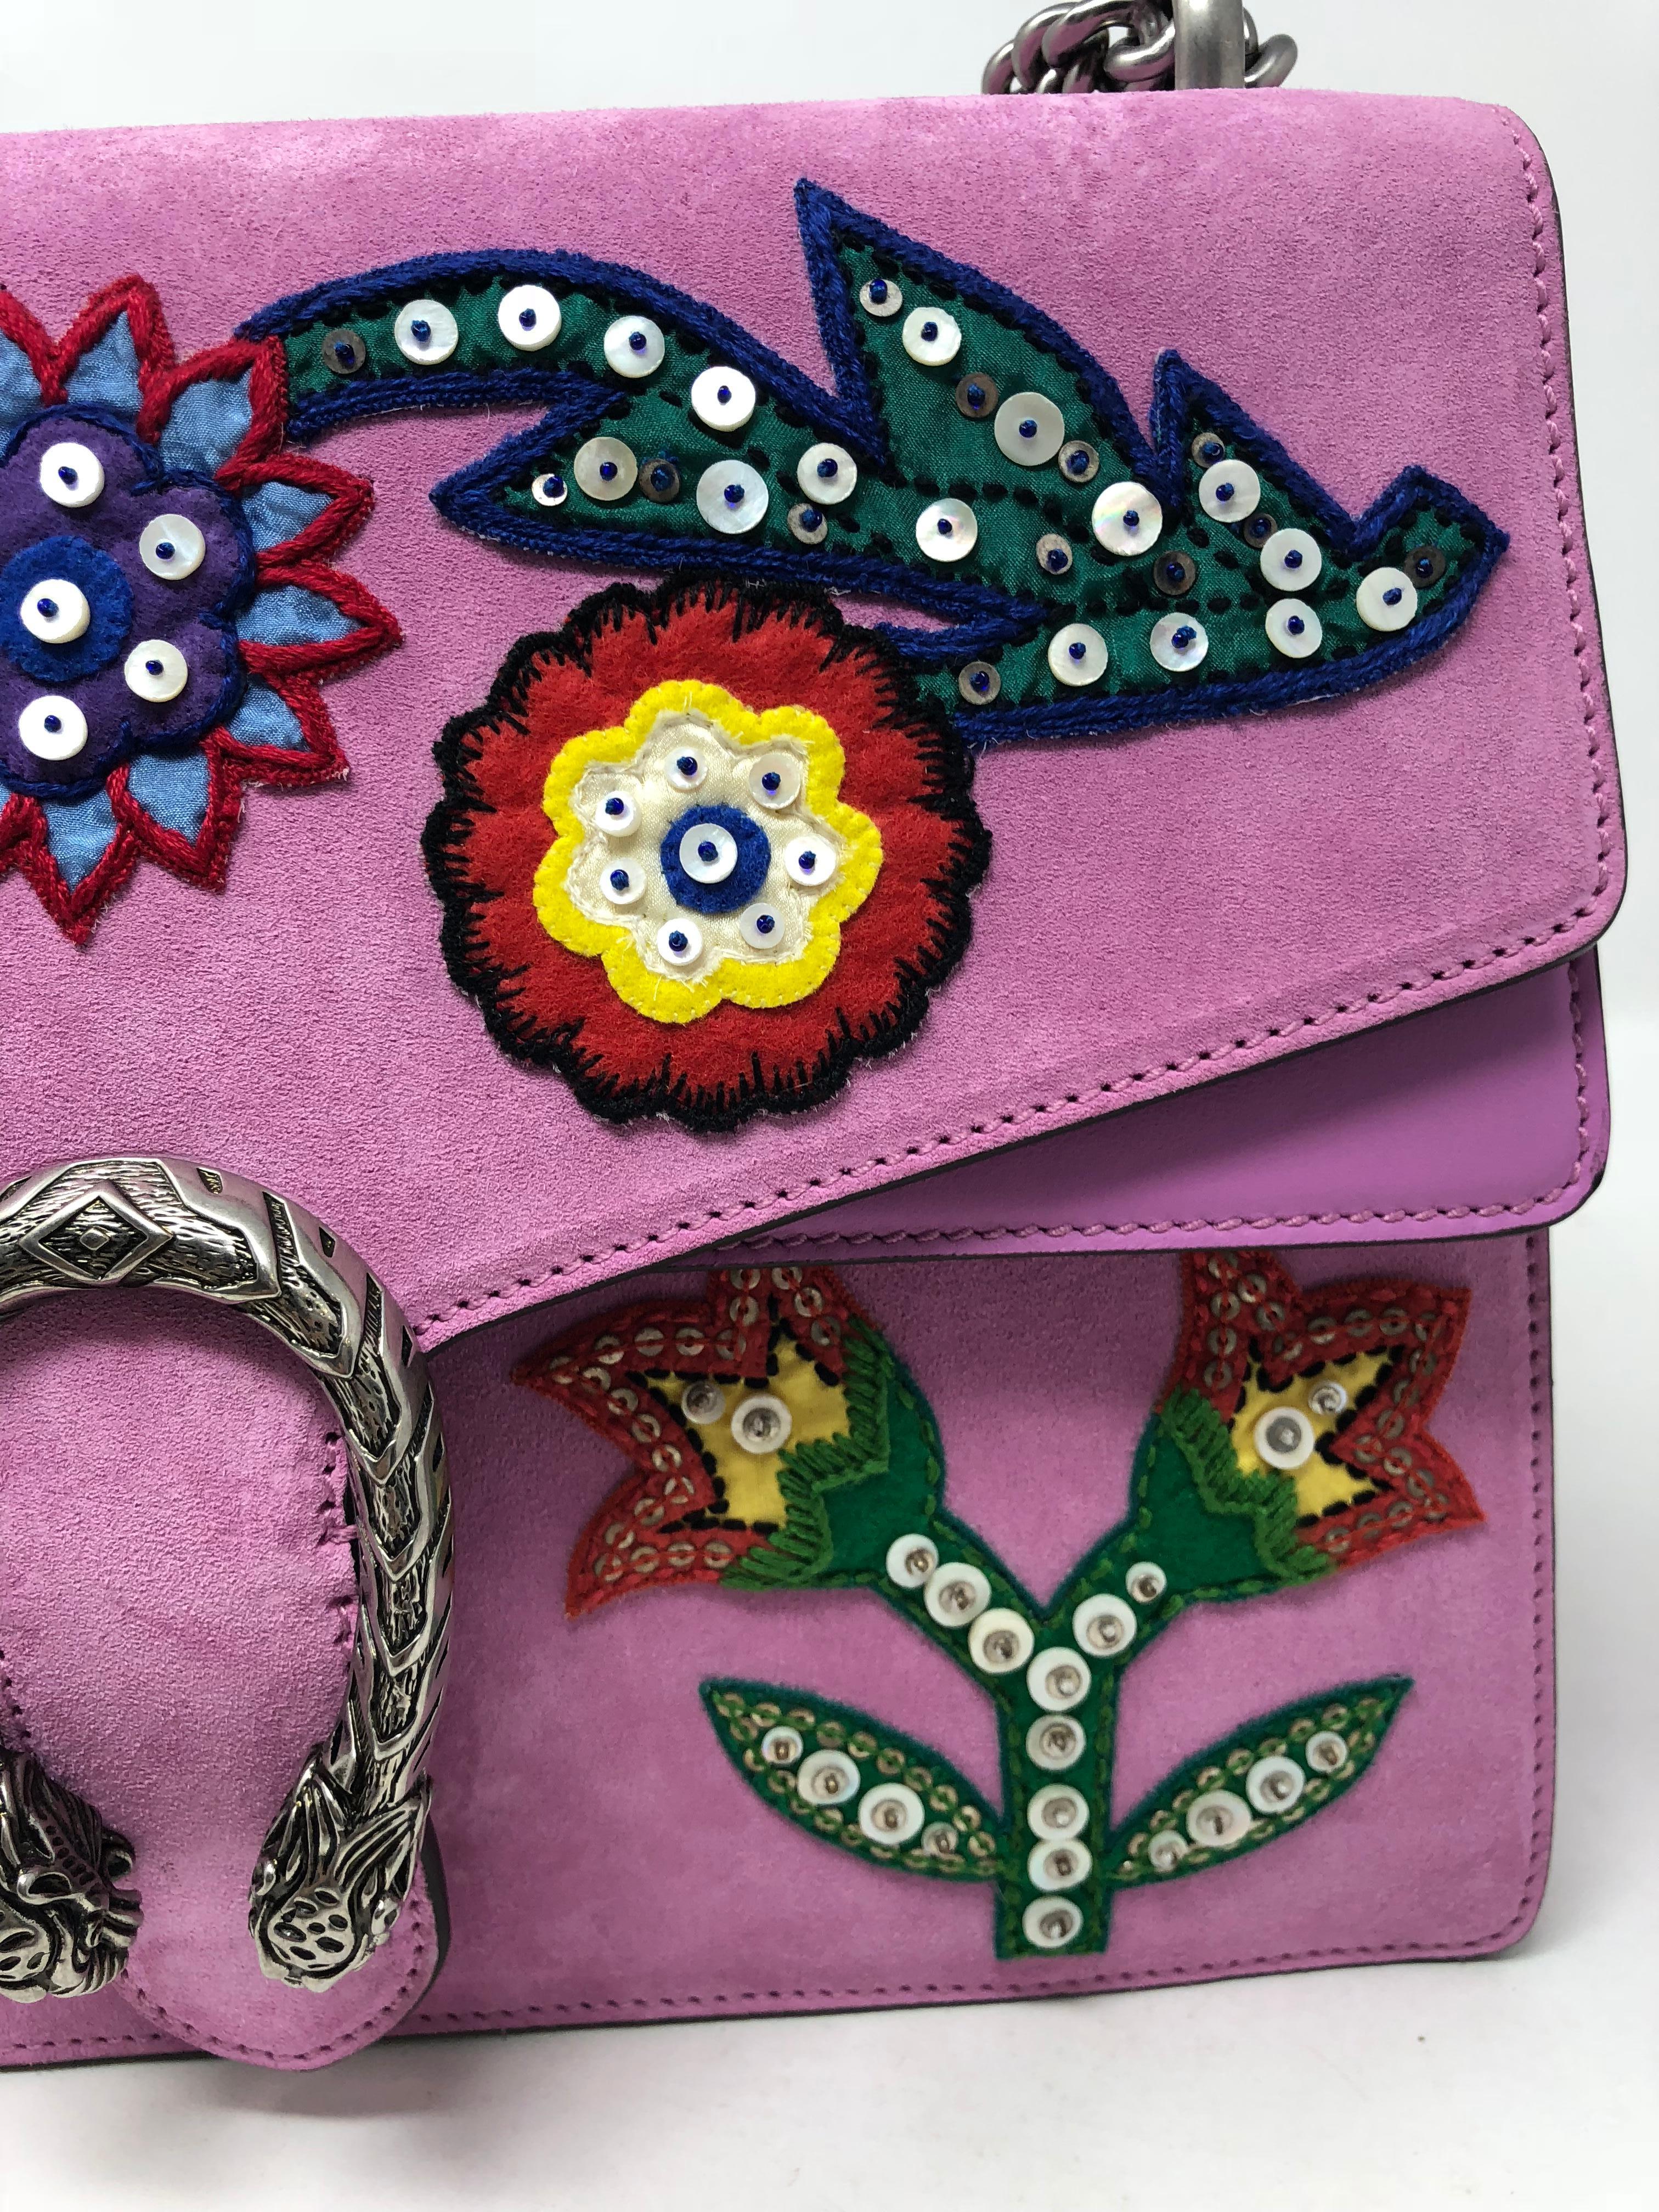 Gucci Dionysus Medium Beaded Heart and Flowers Pink Shoulder Bag  8